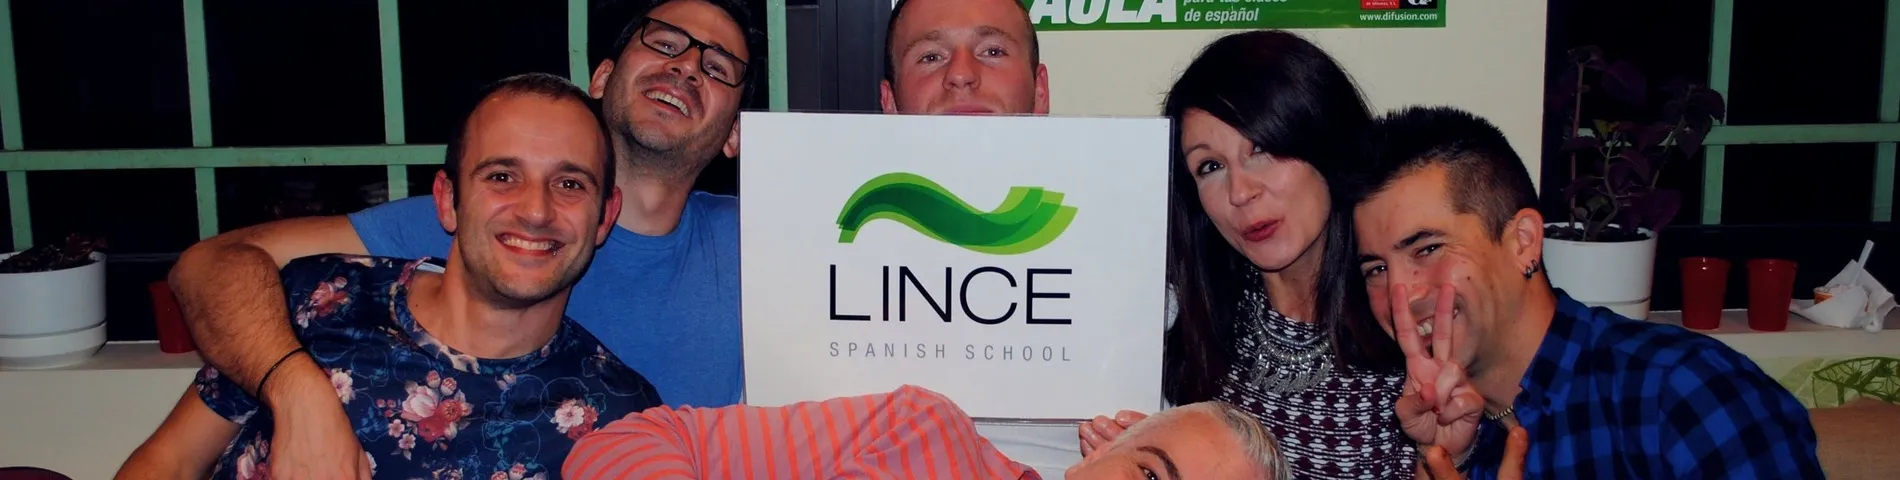 Lince Spanish School bild 1